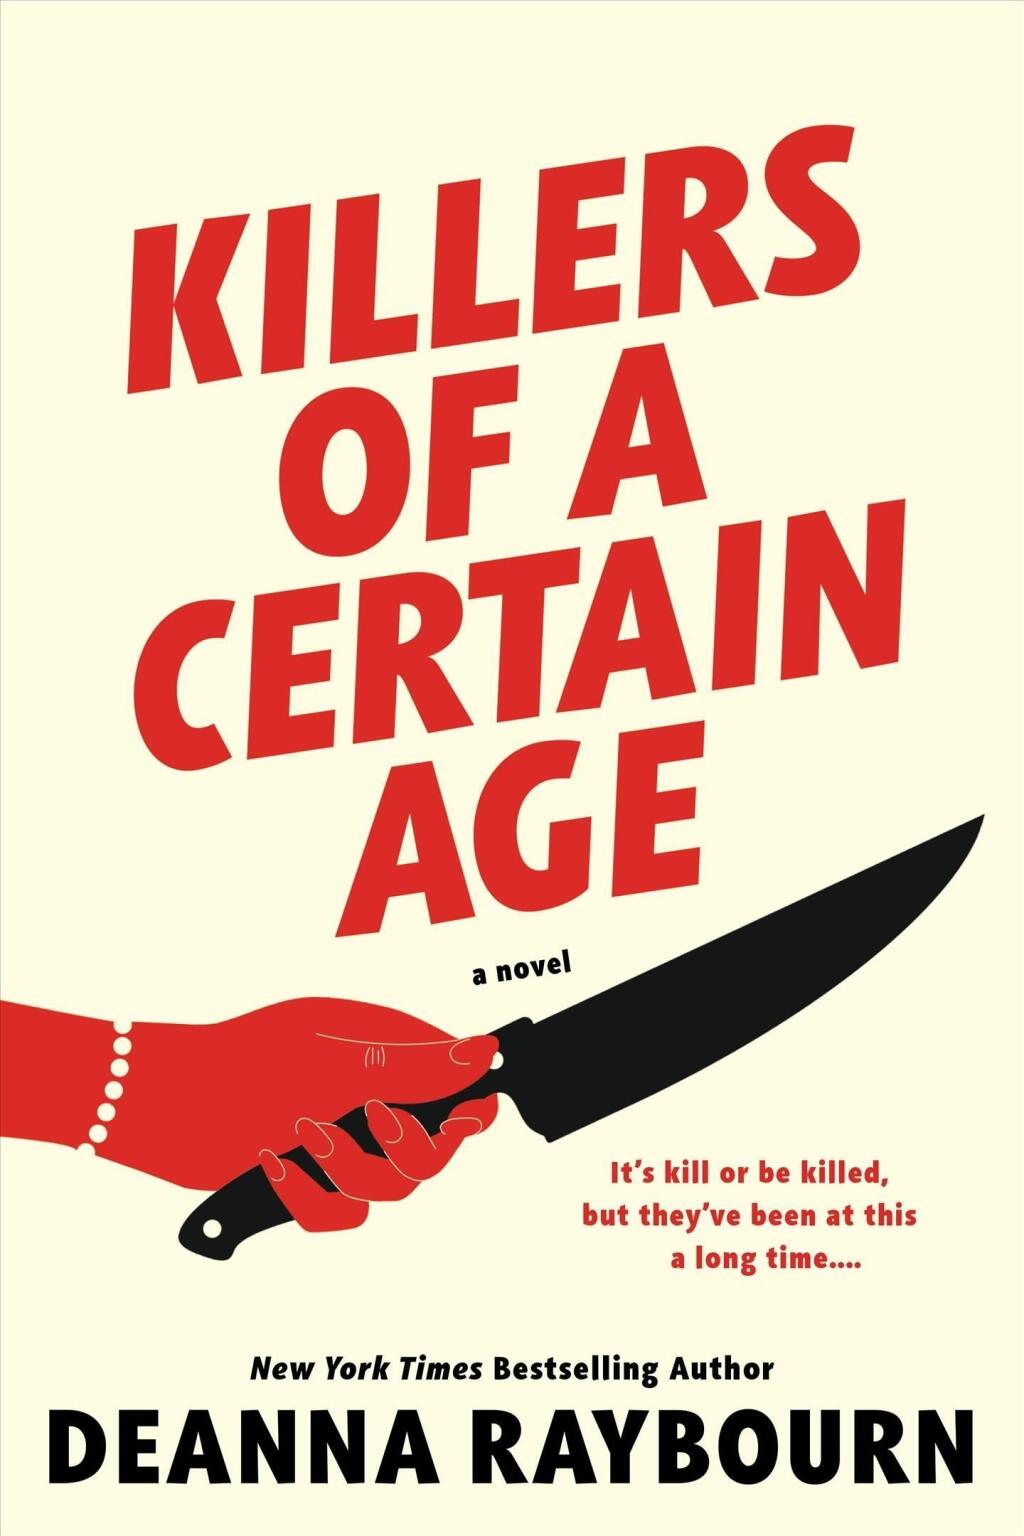 Deanna Raybourn’s “Killers of a Certain Age” is Petaluma’s No. 1 book this week. (Penguin Putnam Inc)